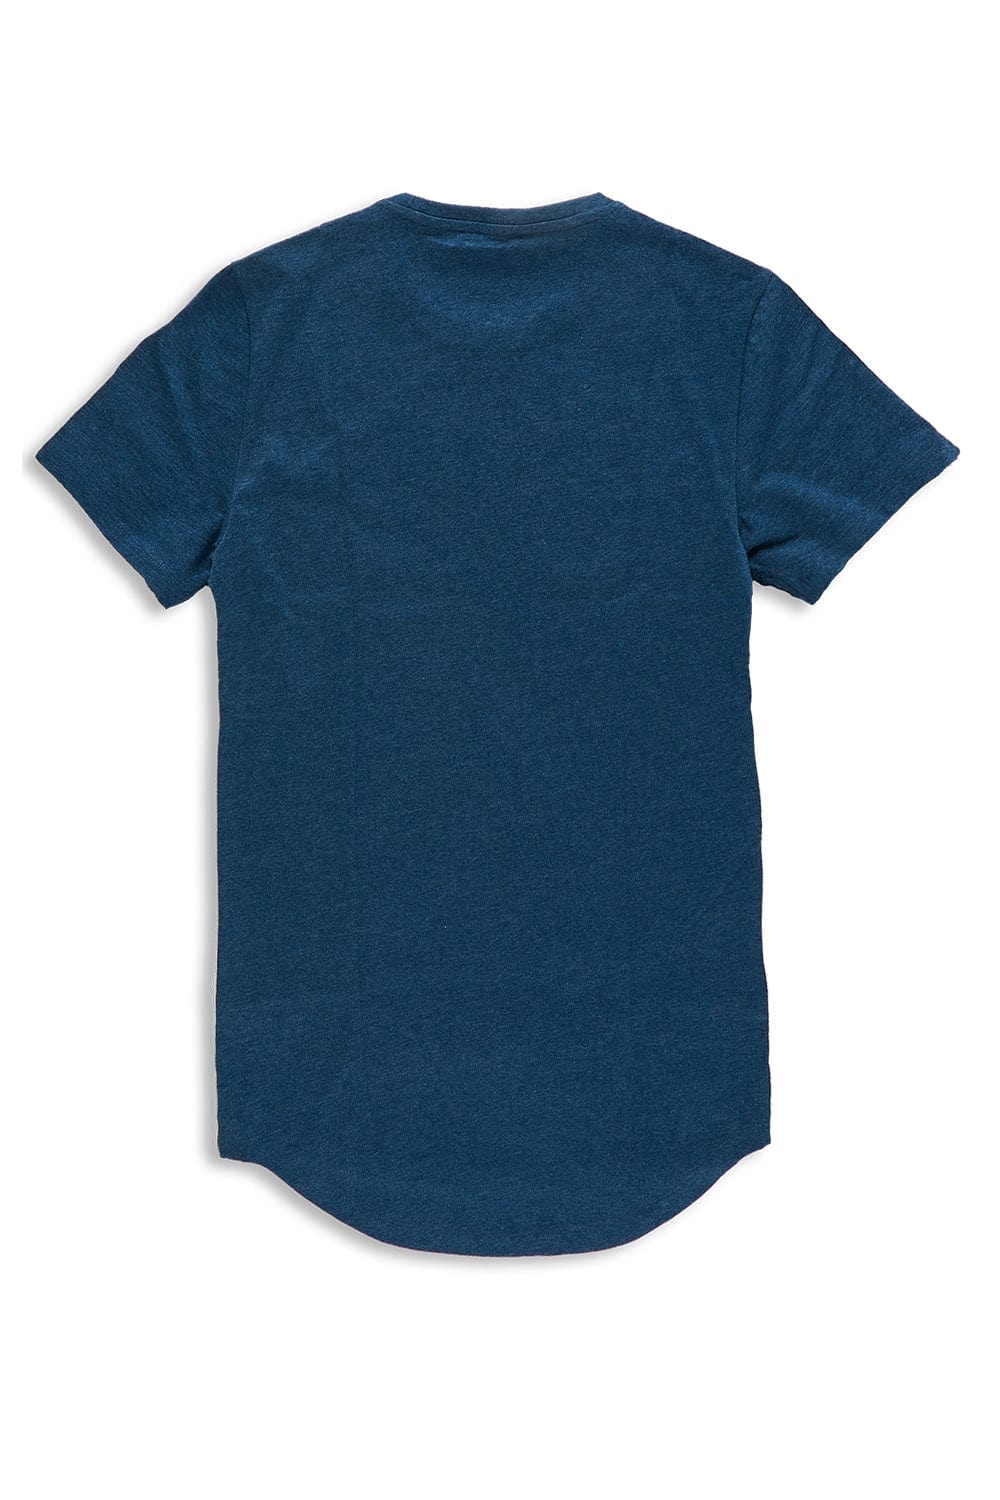 Jordan Craig Melange Scallop T-Shirt (Royal Navy)